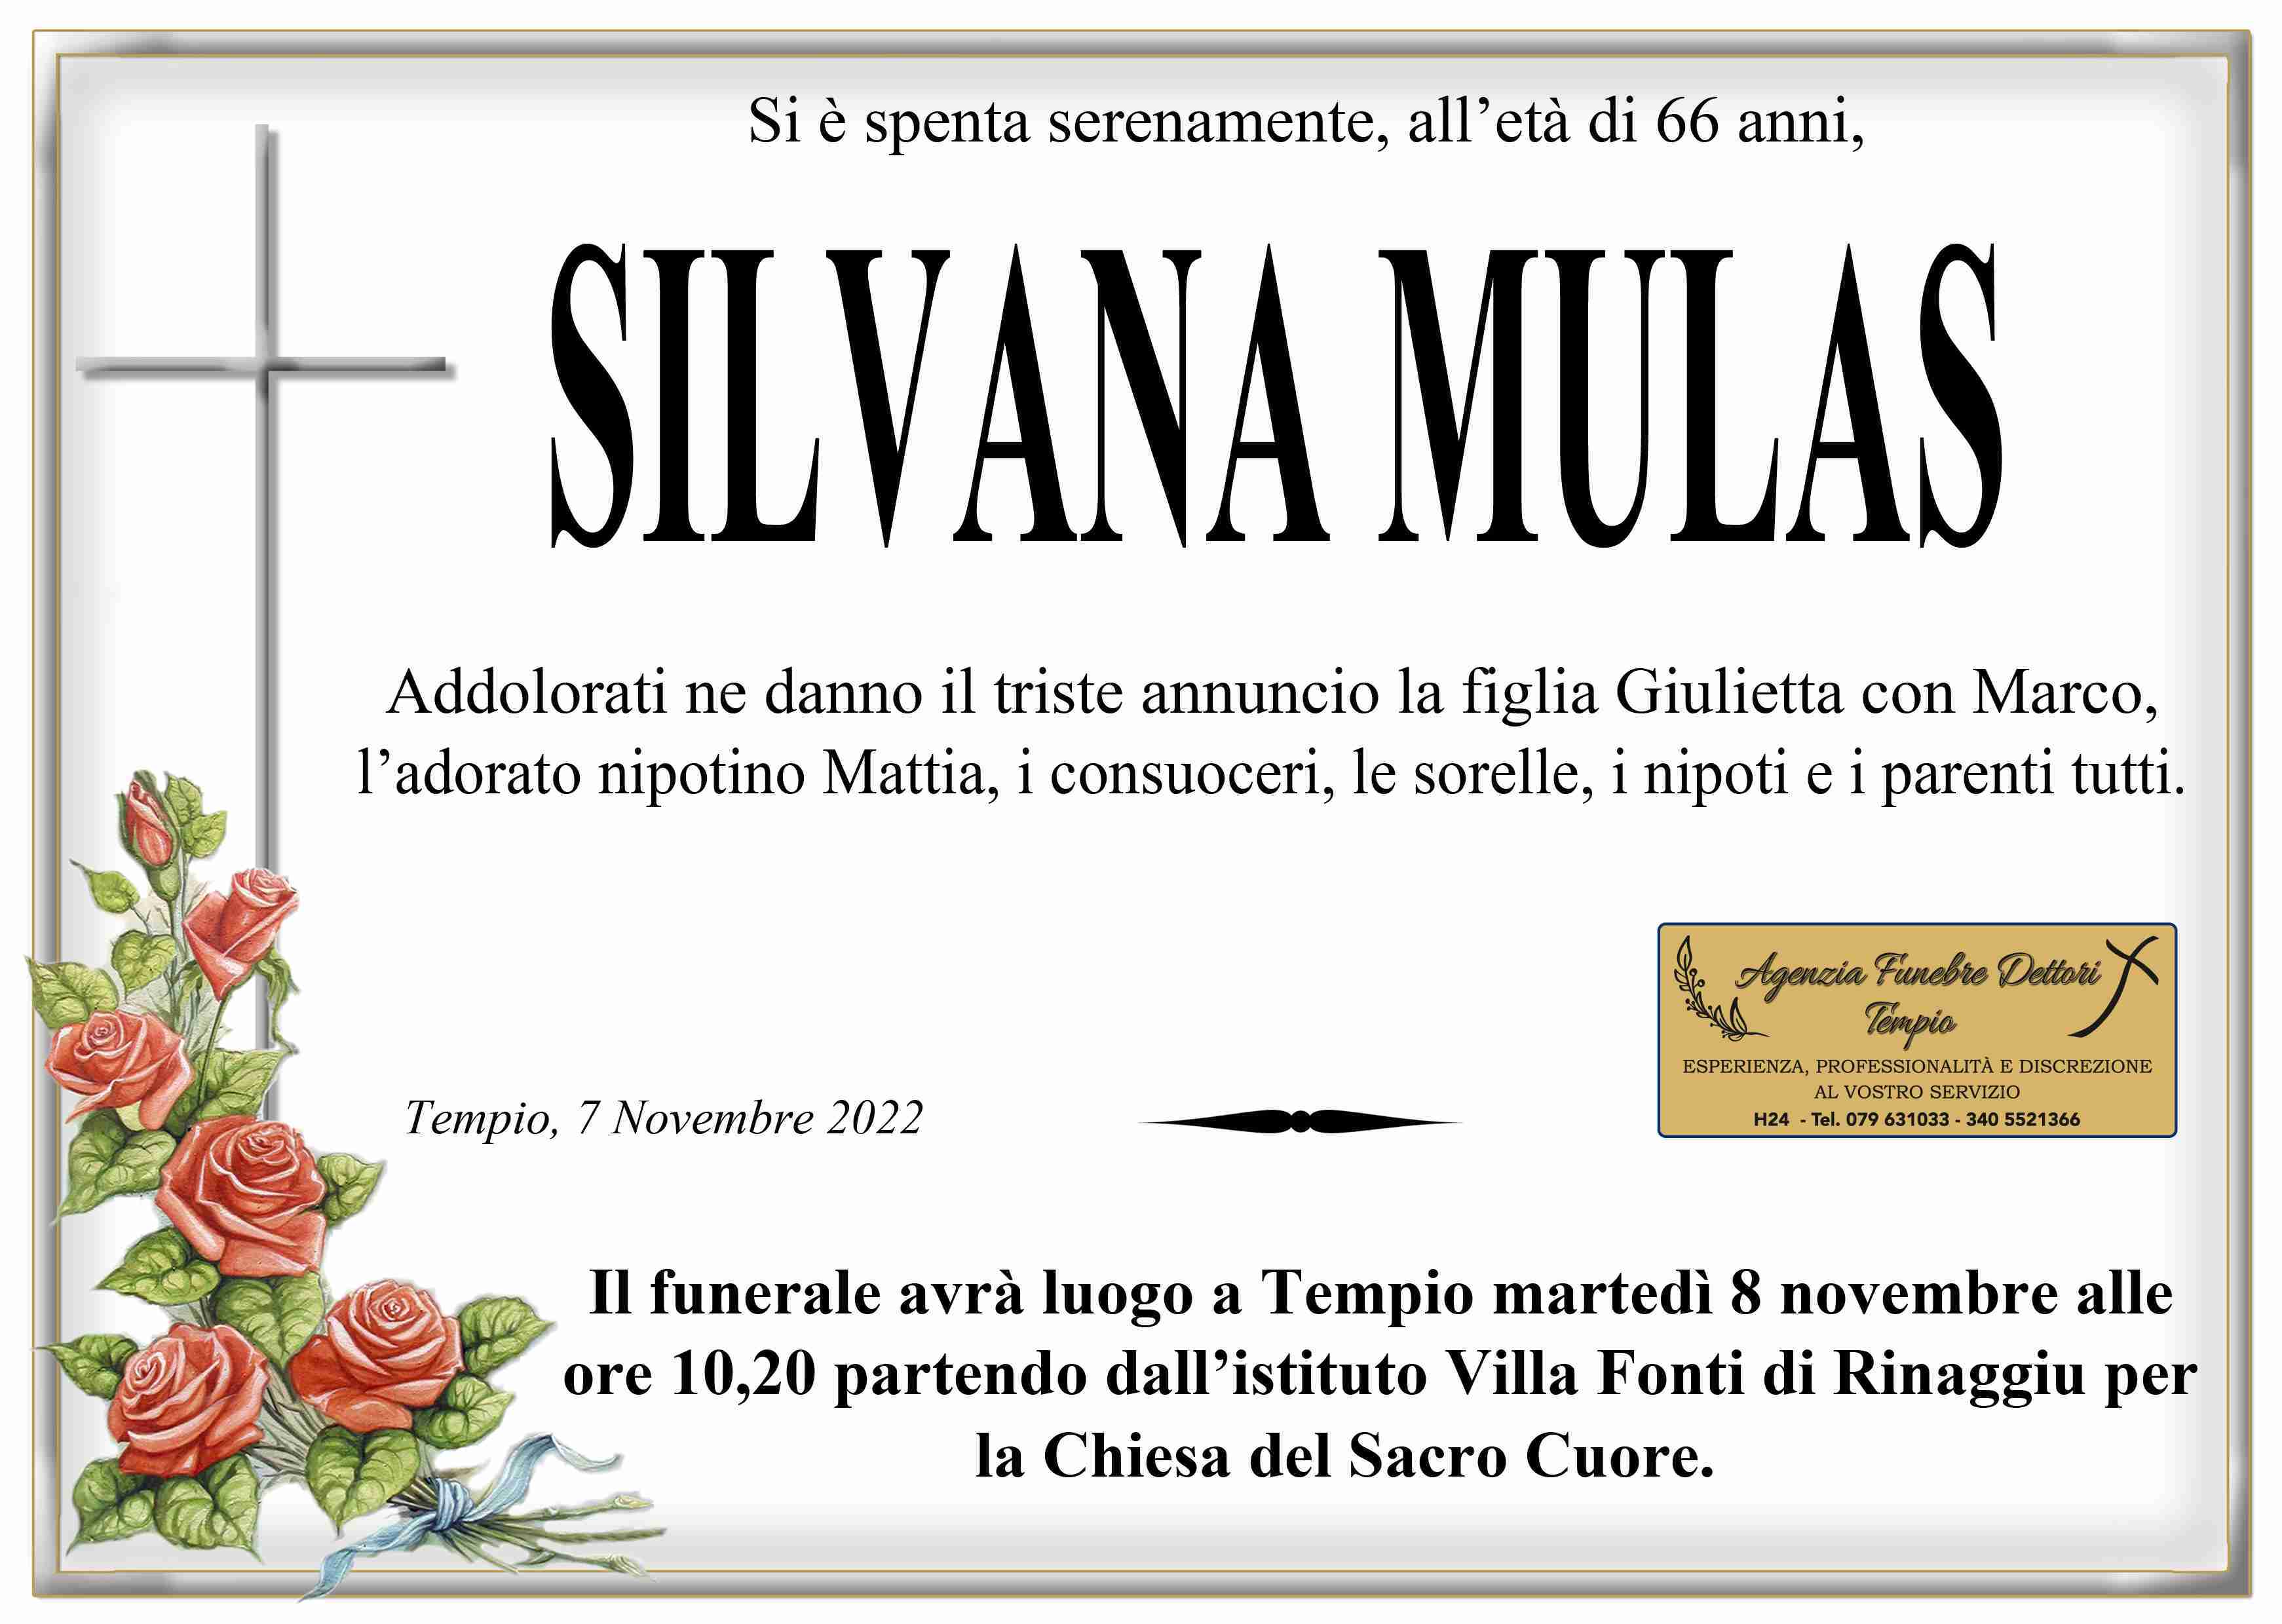 Silvana Mulas